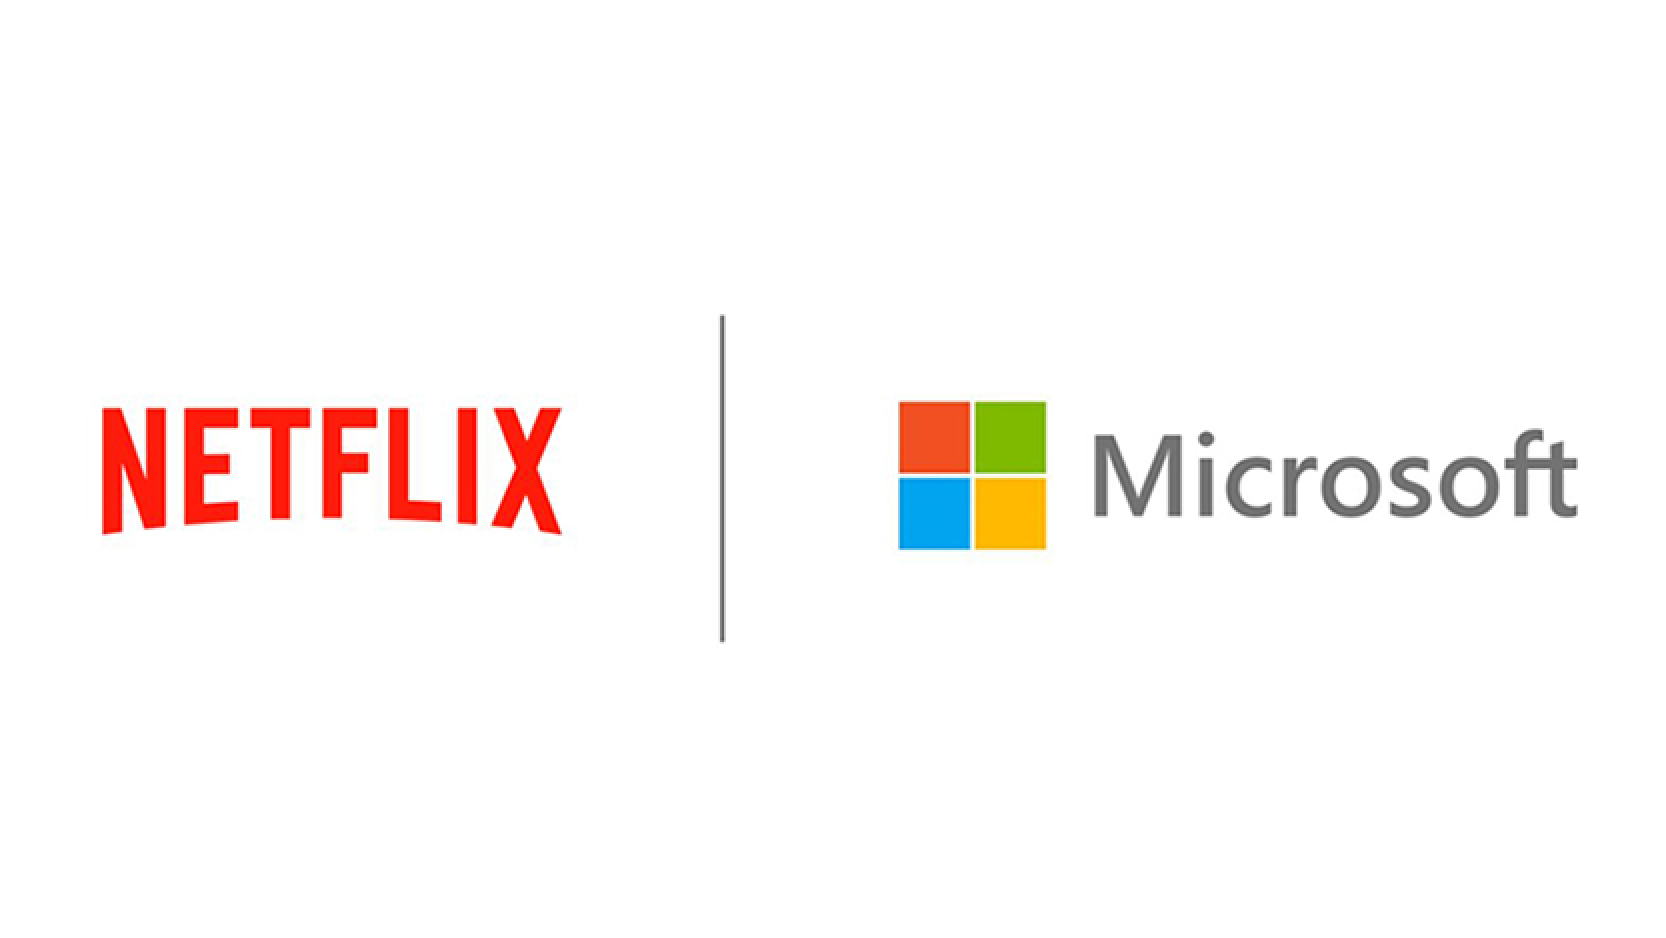 Netflix and Microsoft logos.